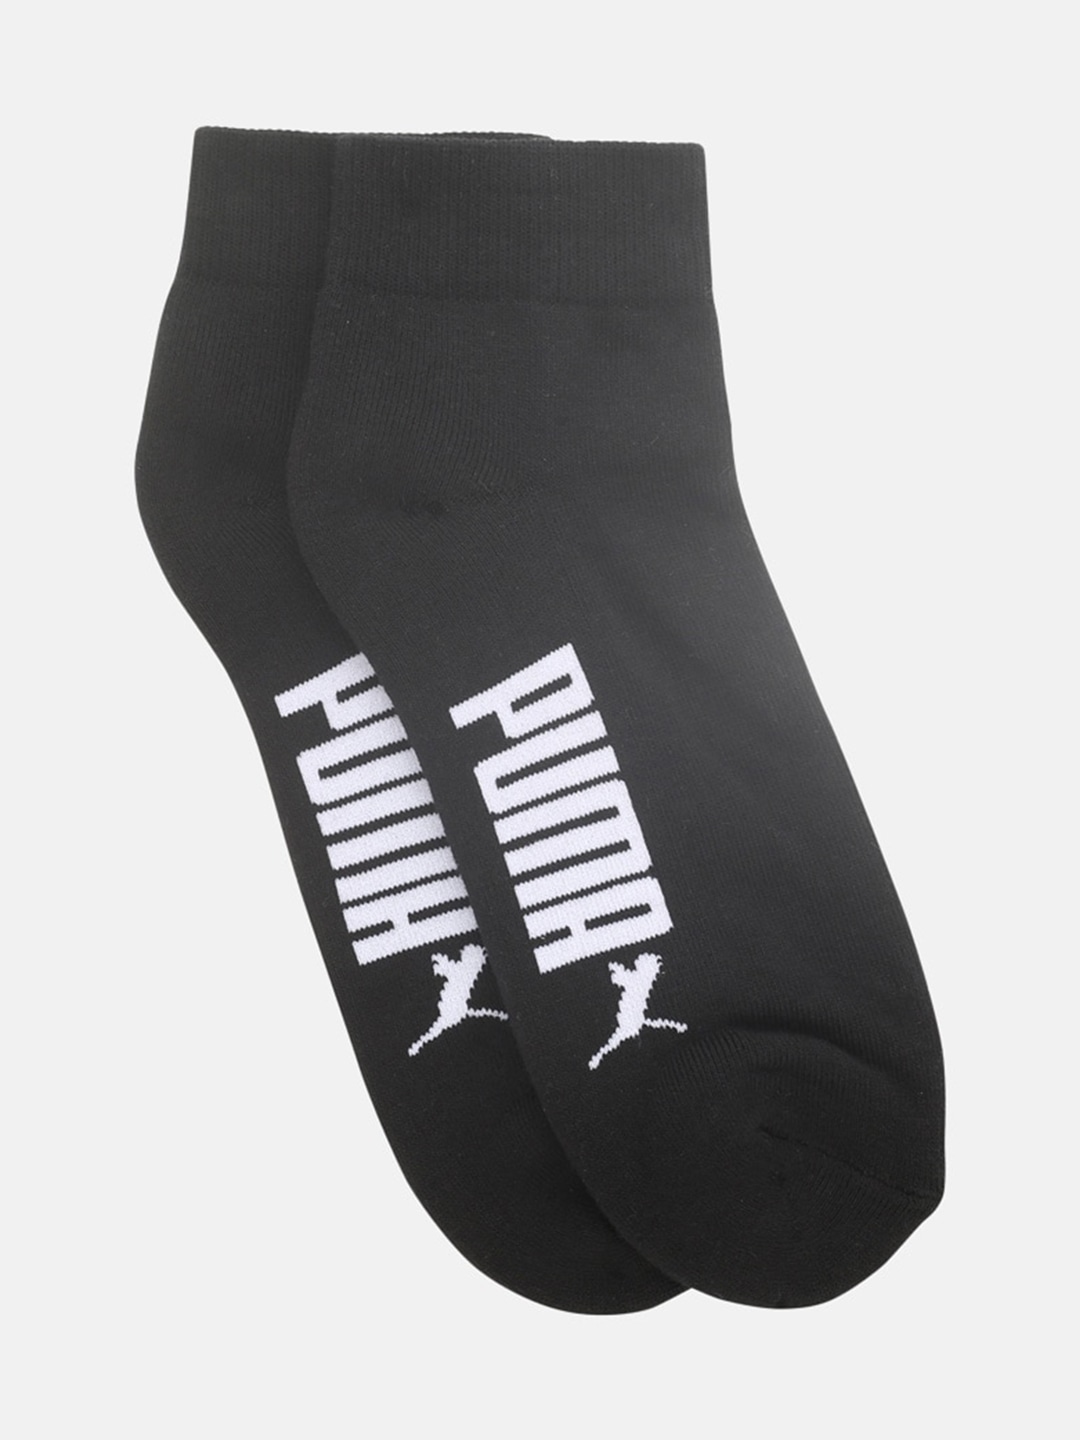 Accessories Socks | Puma Adults Black & White Pack of 2 Brand Logo Patterned Ankle Length Socks - KX68579